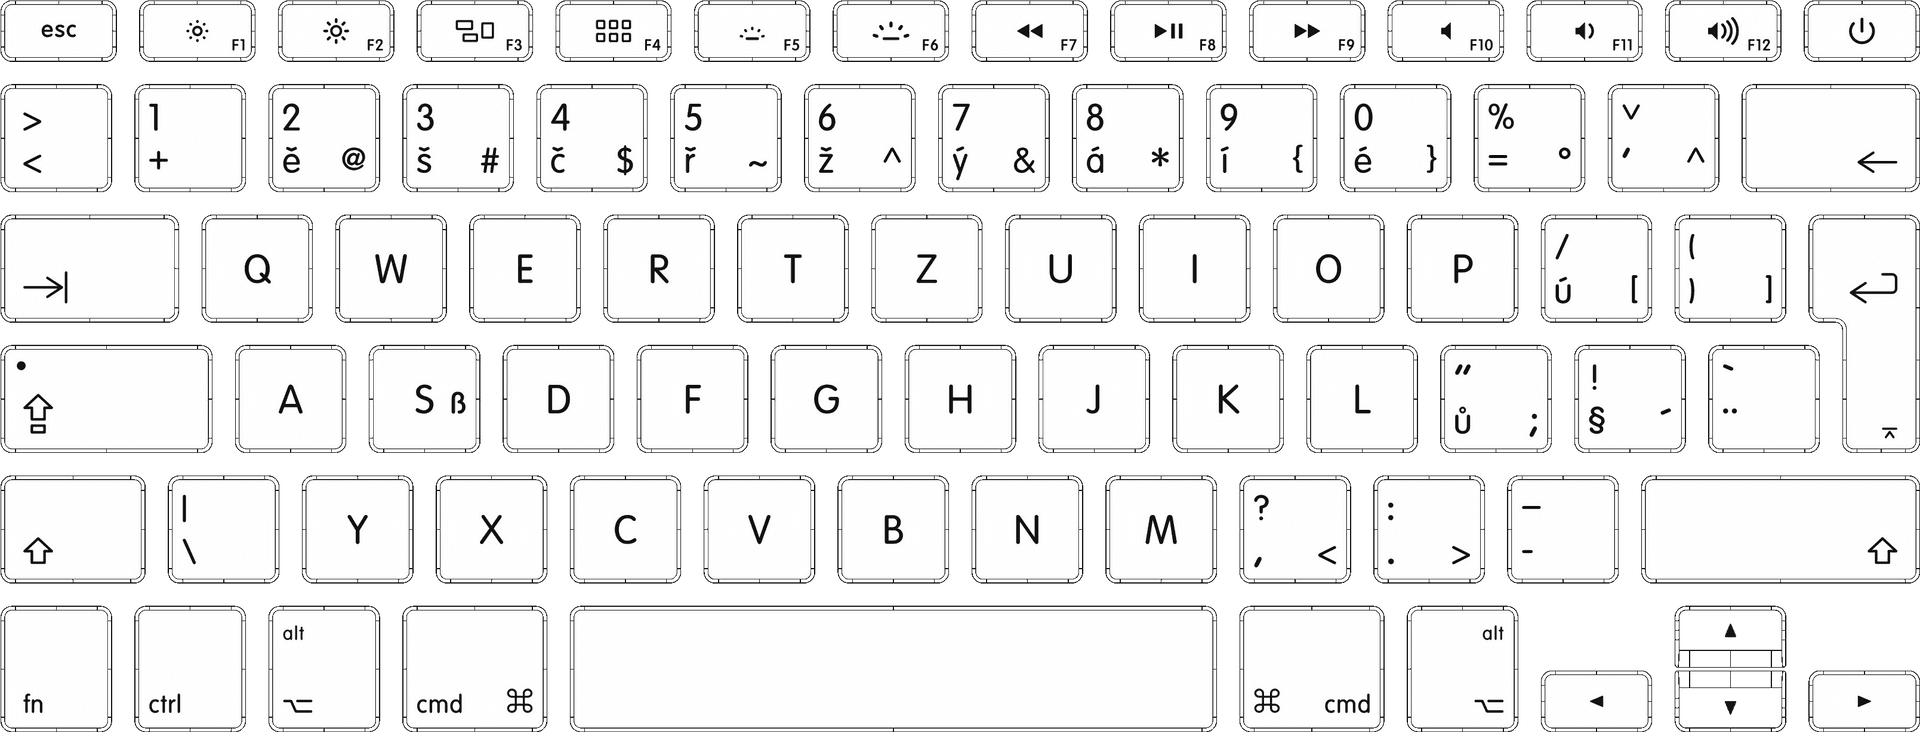 Multilingual Keyboard Layout PNG